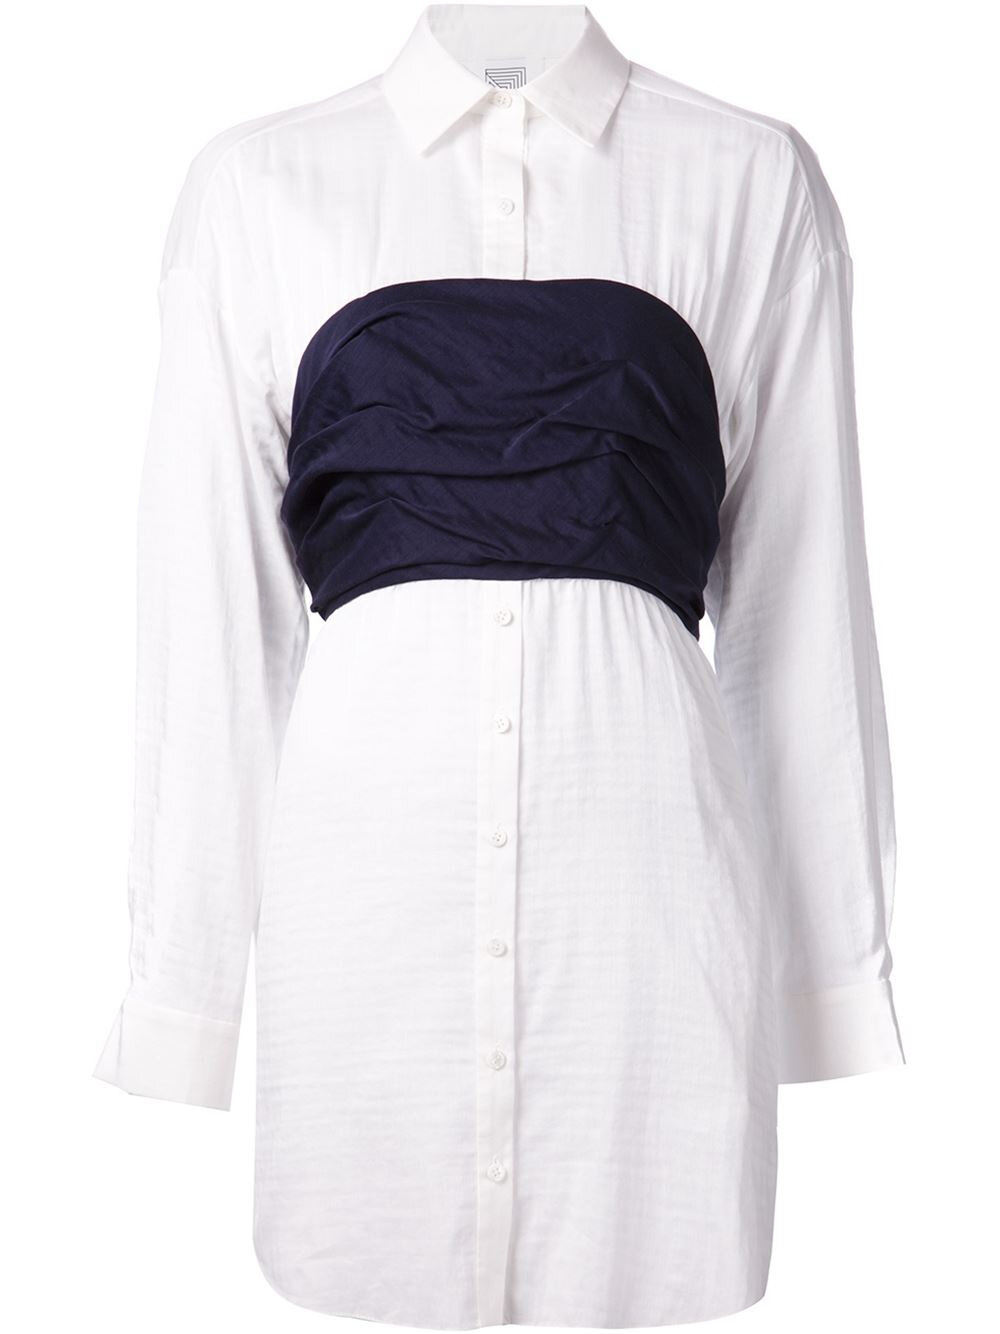 Rosie Assoulin Banded Long-Line Blouse in White.jpg